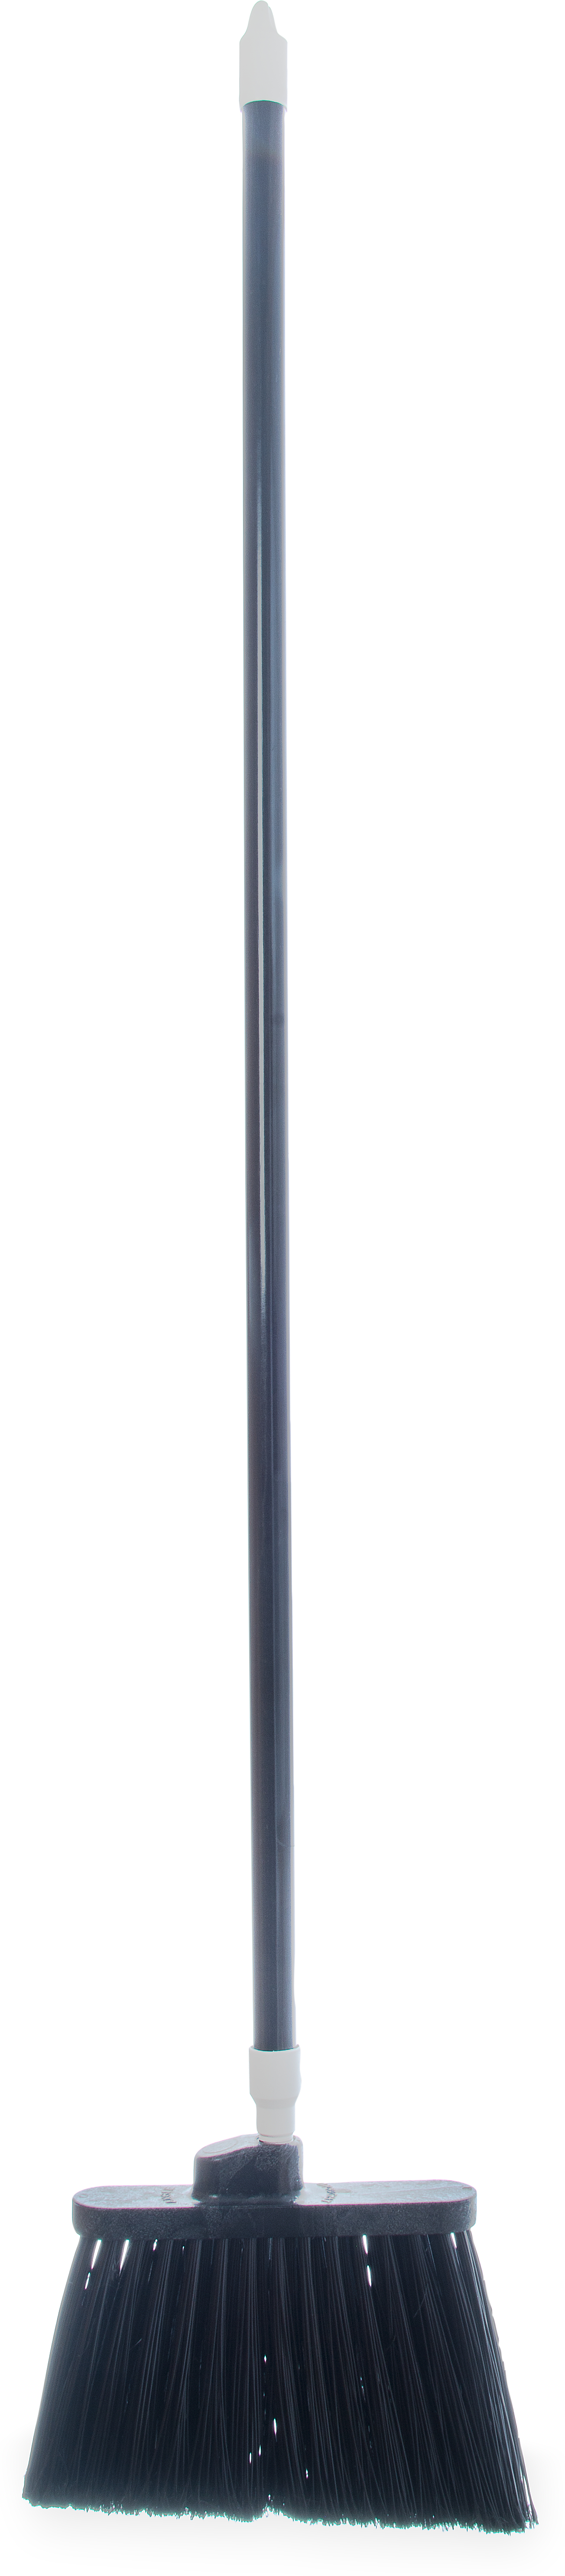 Duo-Sweep Angle Broom Flagged Bristle 56 Long - Black